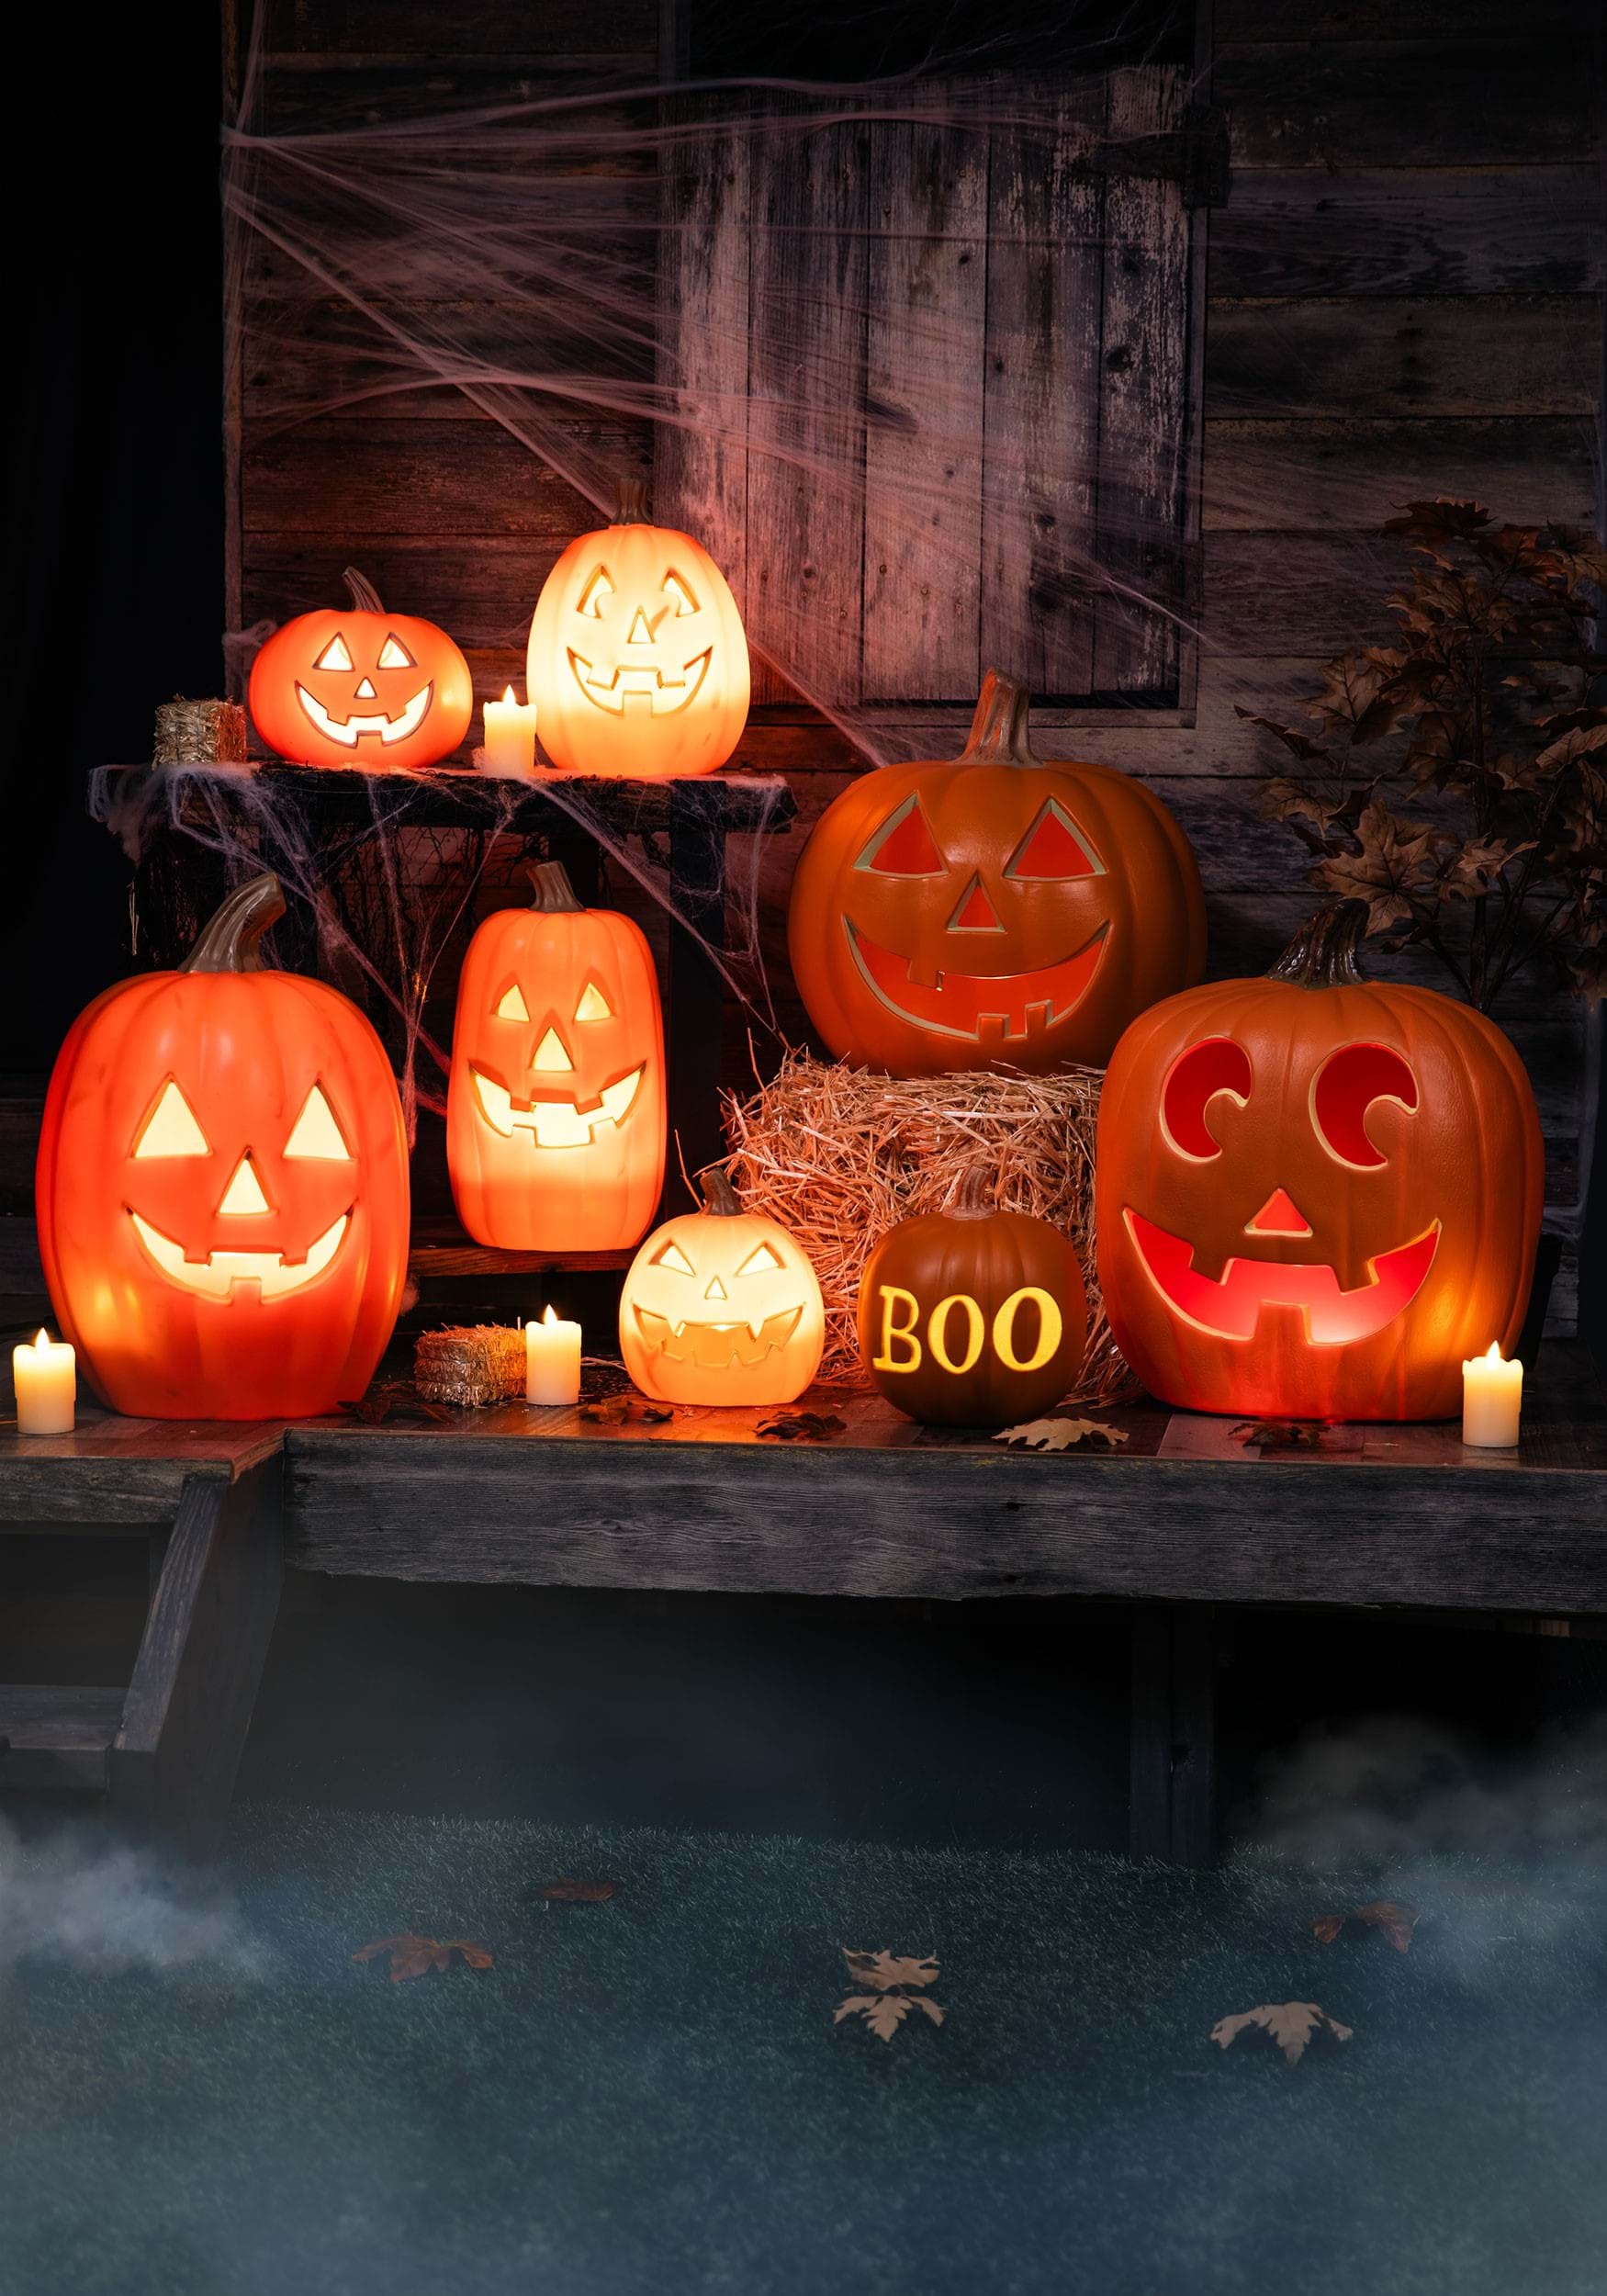 Jack-O'-Lantern Light-Up Mini Lantern Halloween Decorations